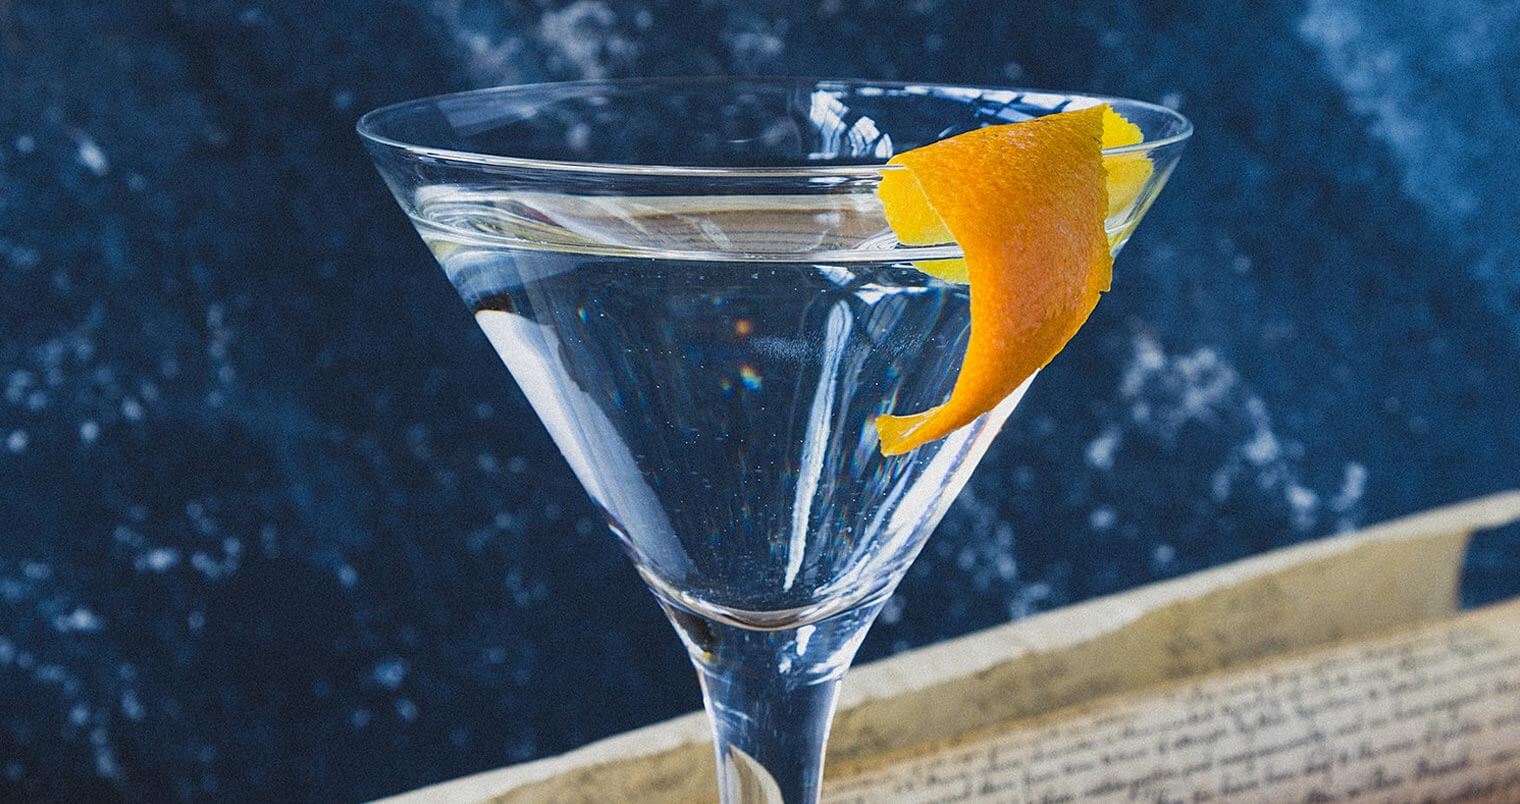 Bluecoat Martini, american memorobilia, declaration in background, featured image